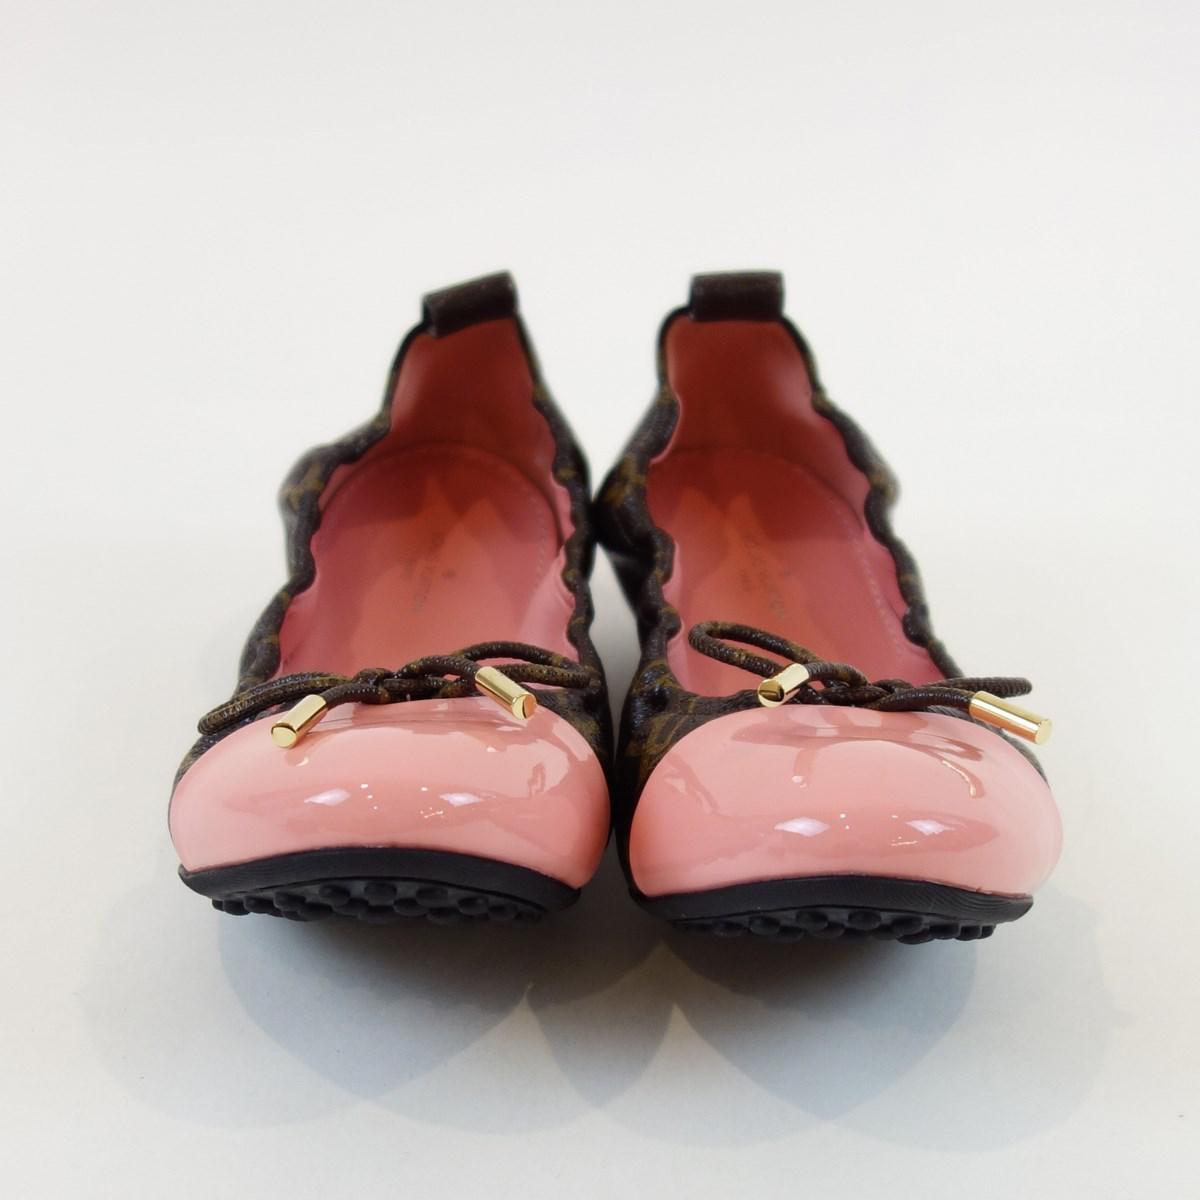 Louis Vuitton Canvas Monogram Flirty Line Flat Ballerina Ballet Shoes Size 39m in Brown - Lyst